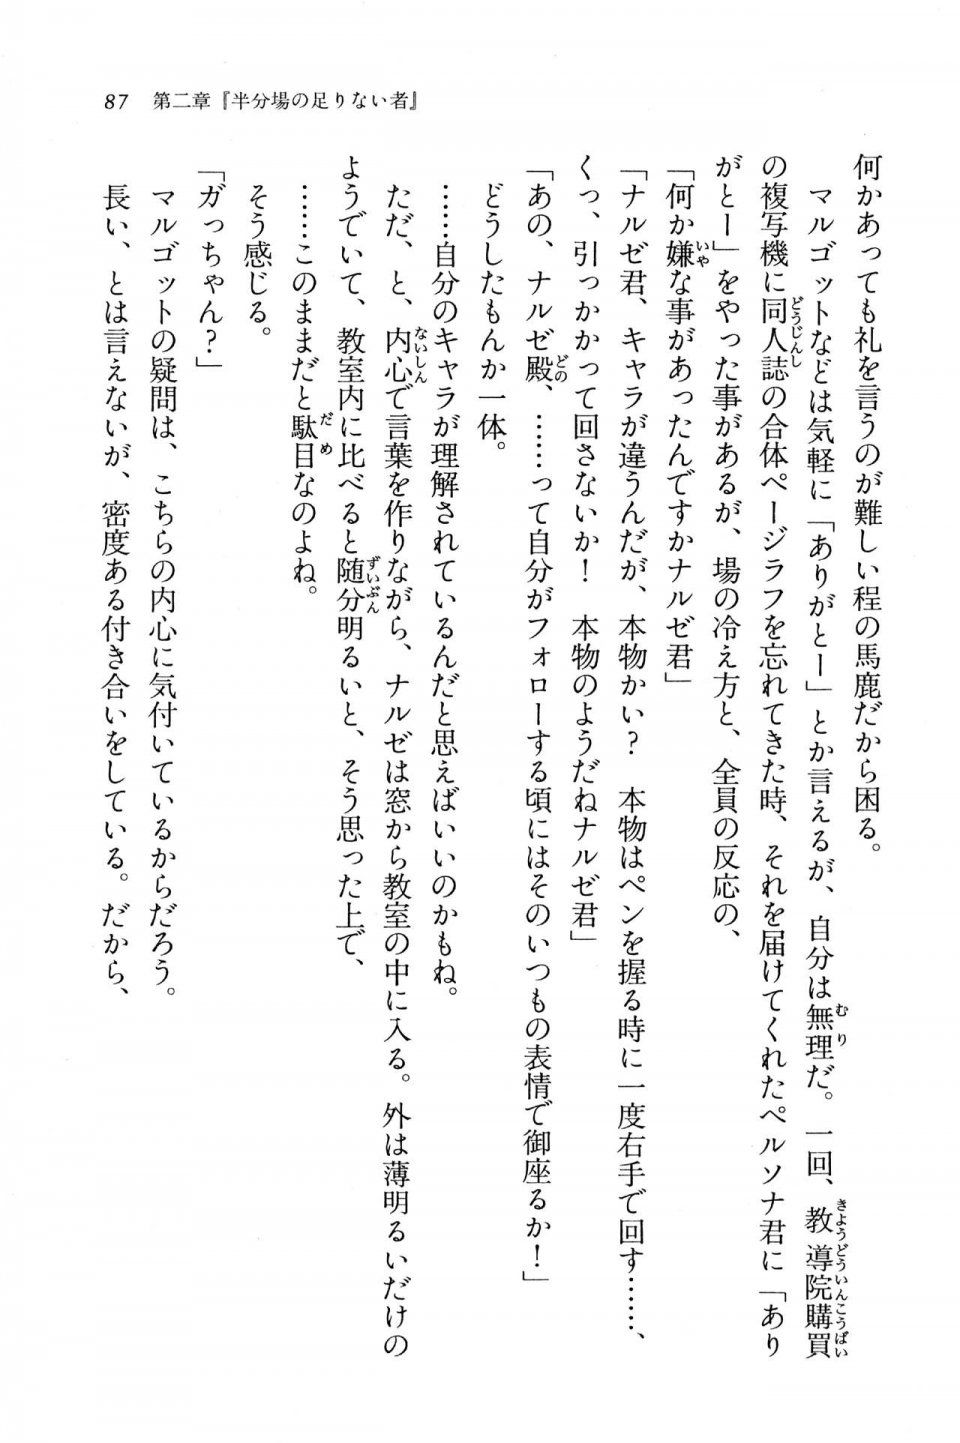 Kyoukai Senjou no Horizon BD Special Mininovel Vol 5(3A) - Photo #91